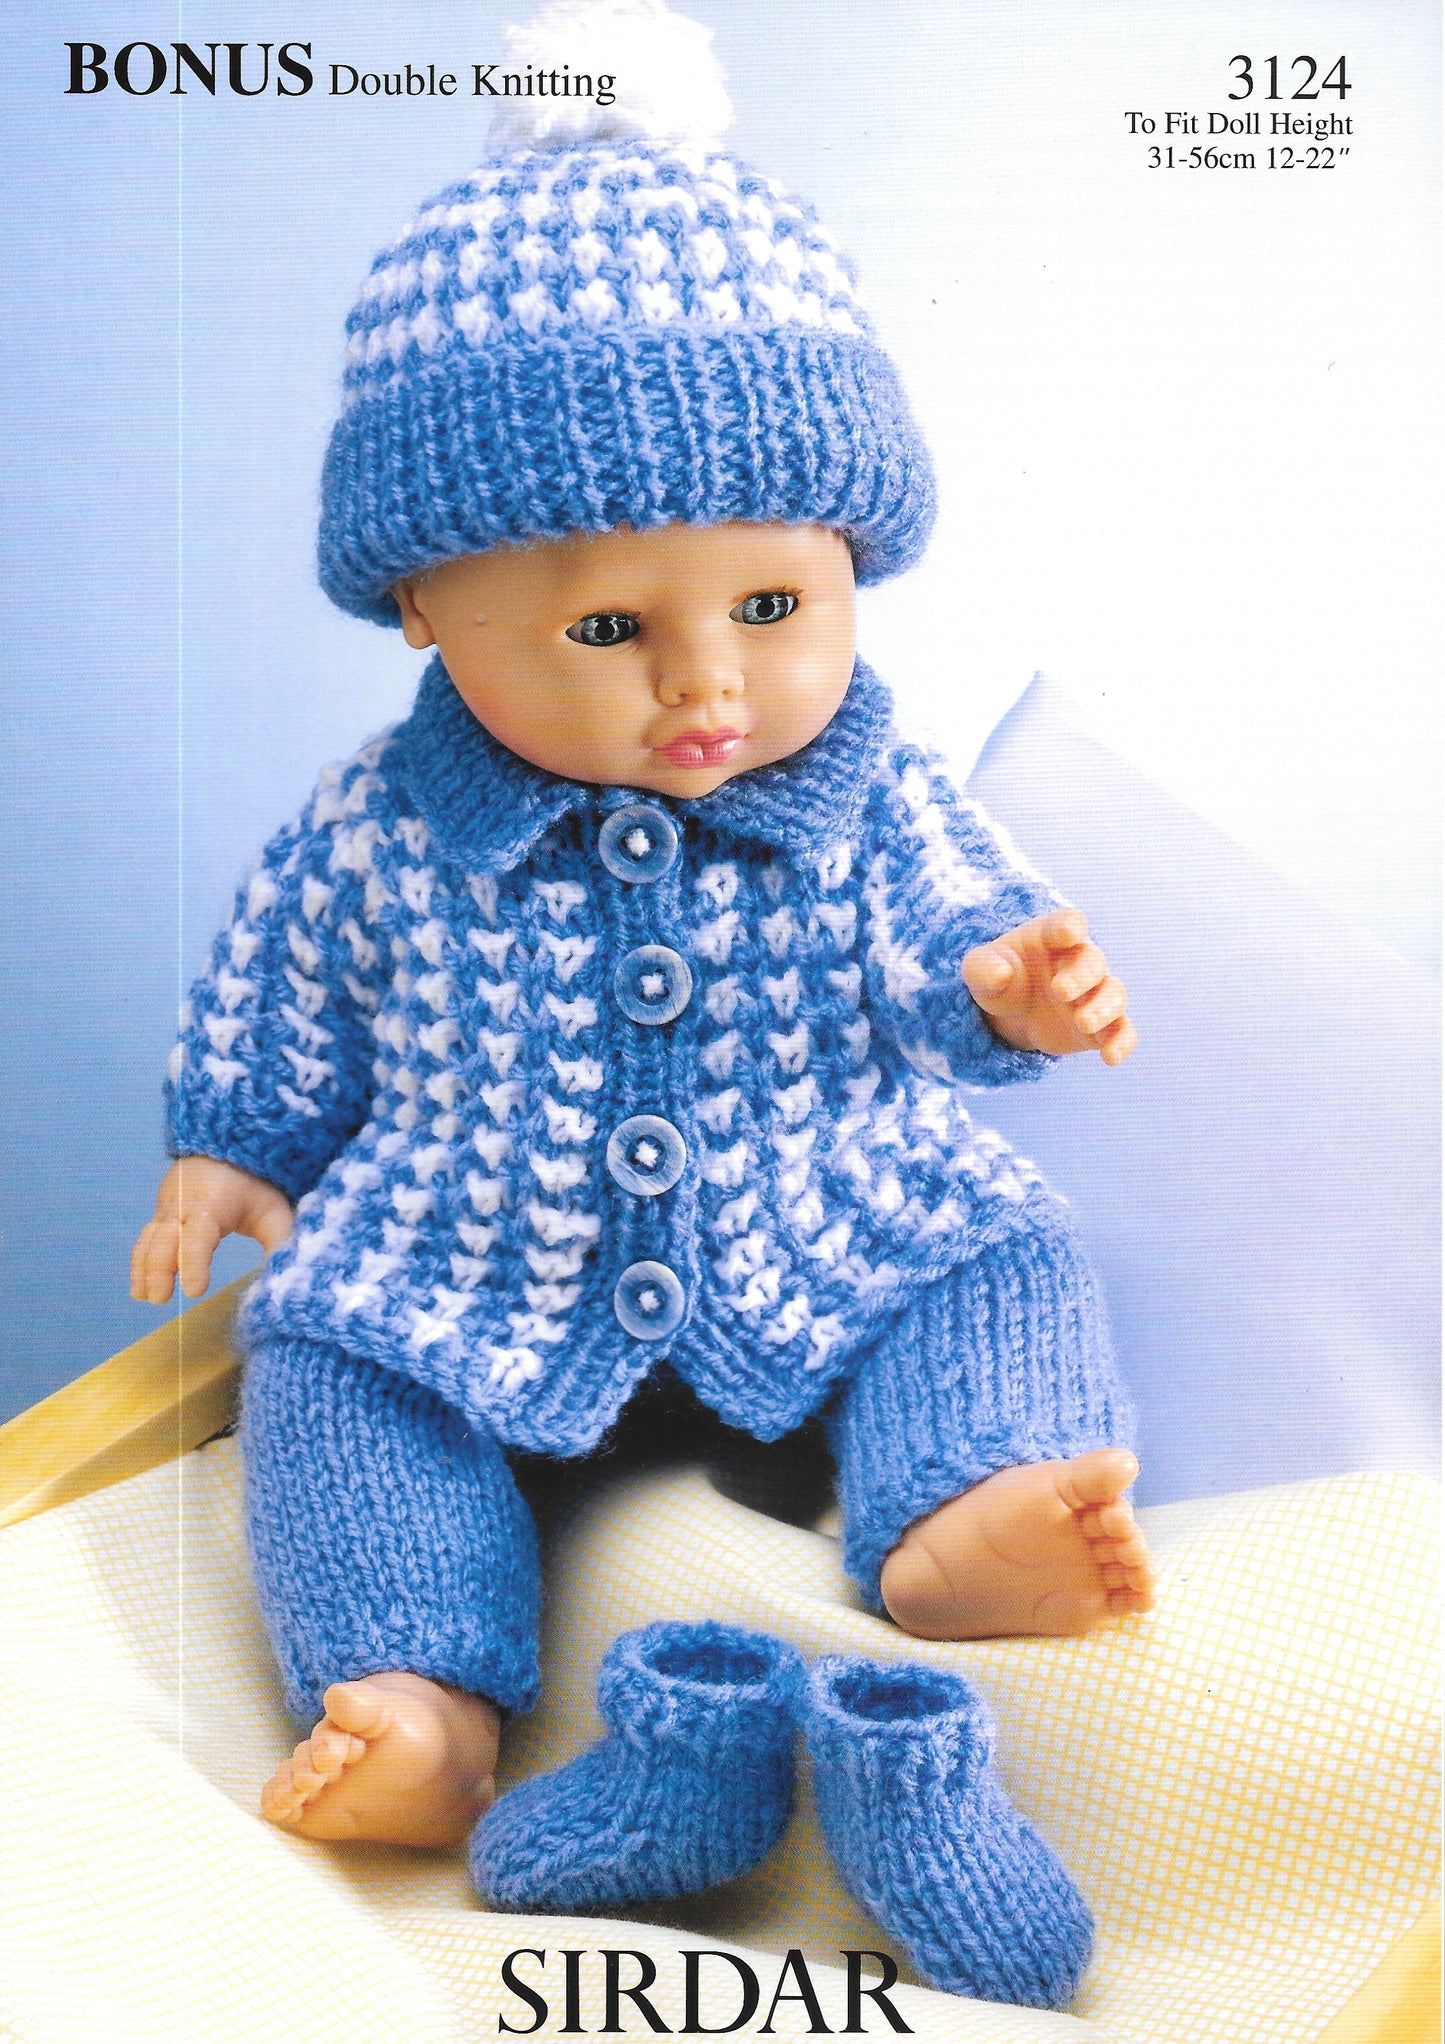 3124 Sirdar Knitting Pattern. Doll's Clothes Double Knitting Yarn. 12-22" tall doll